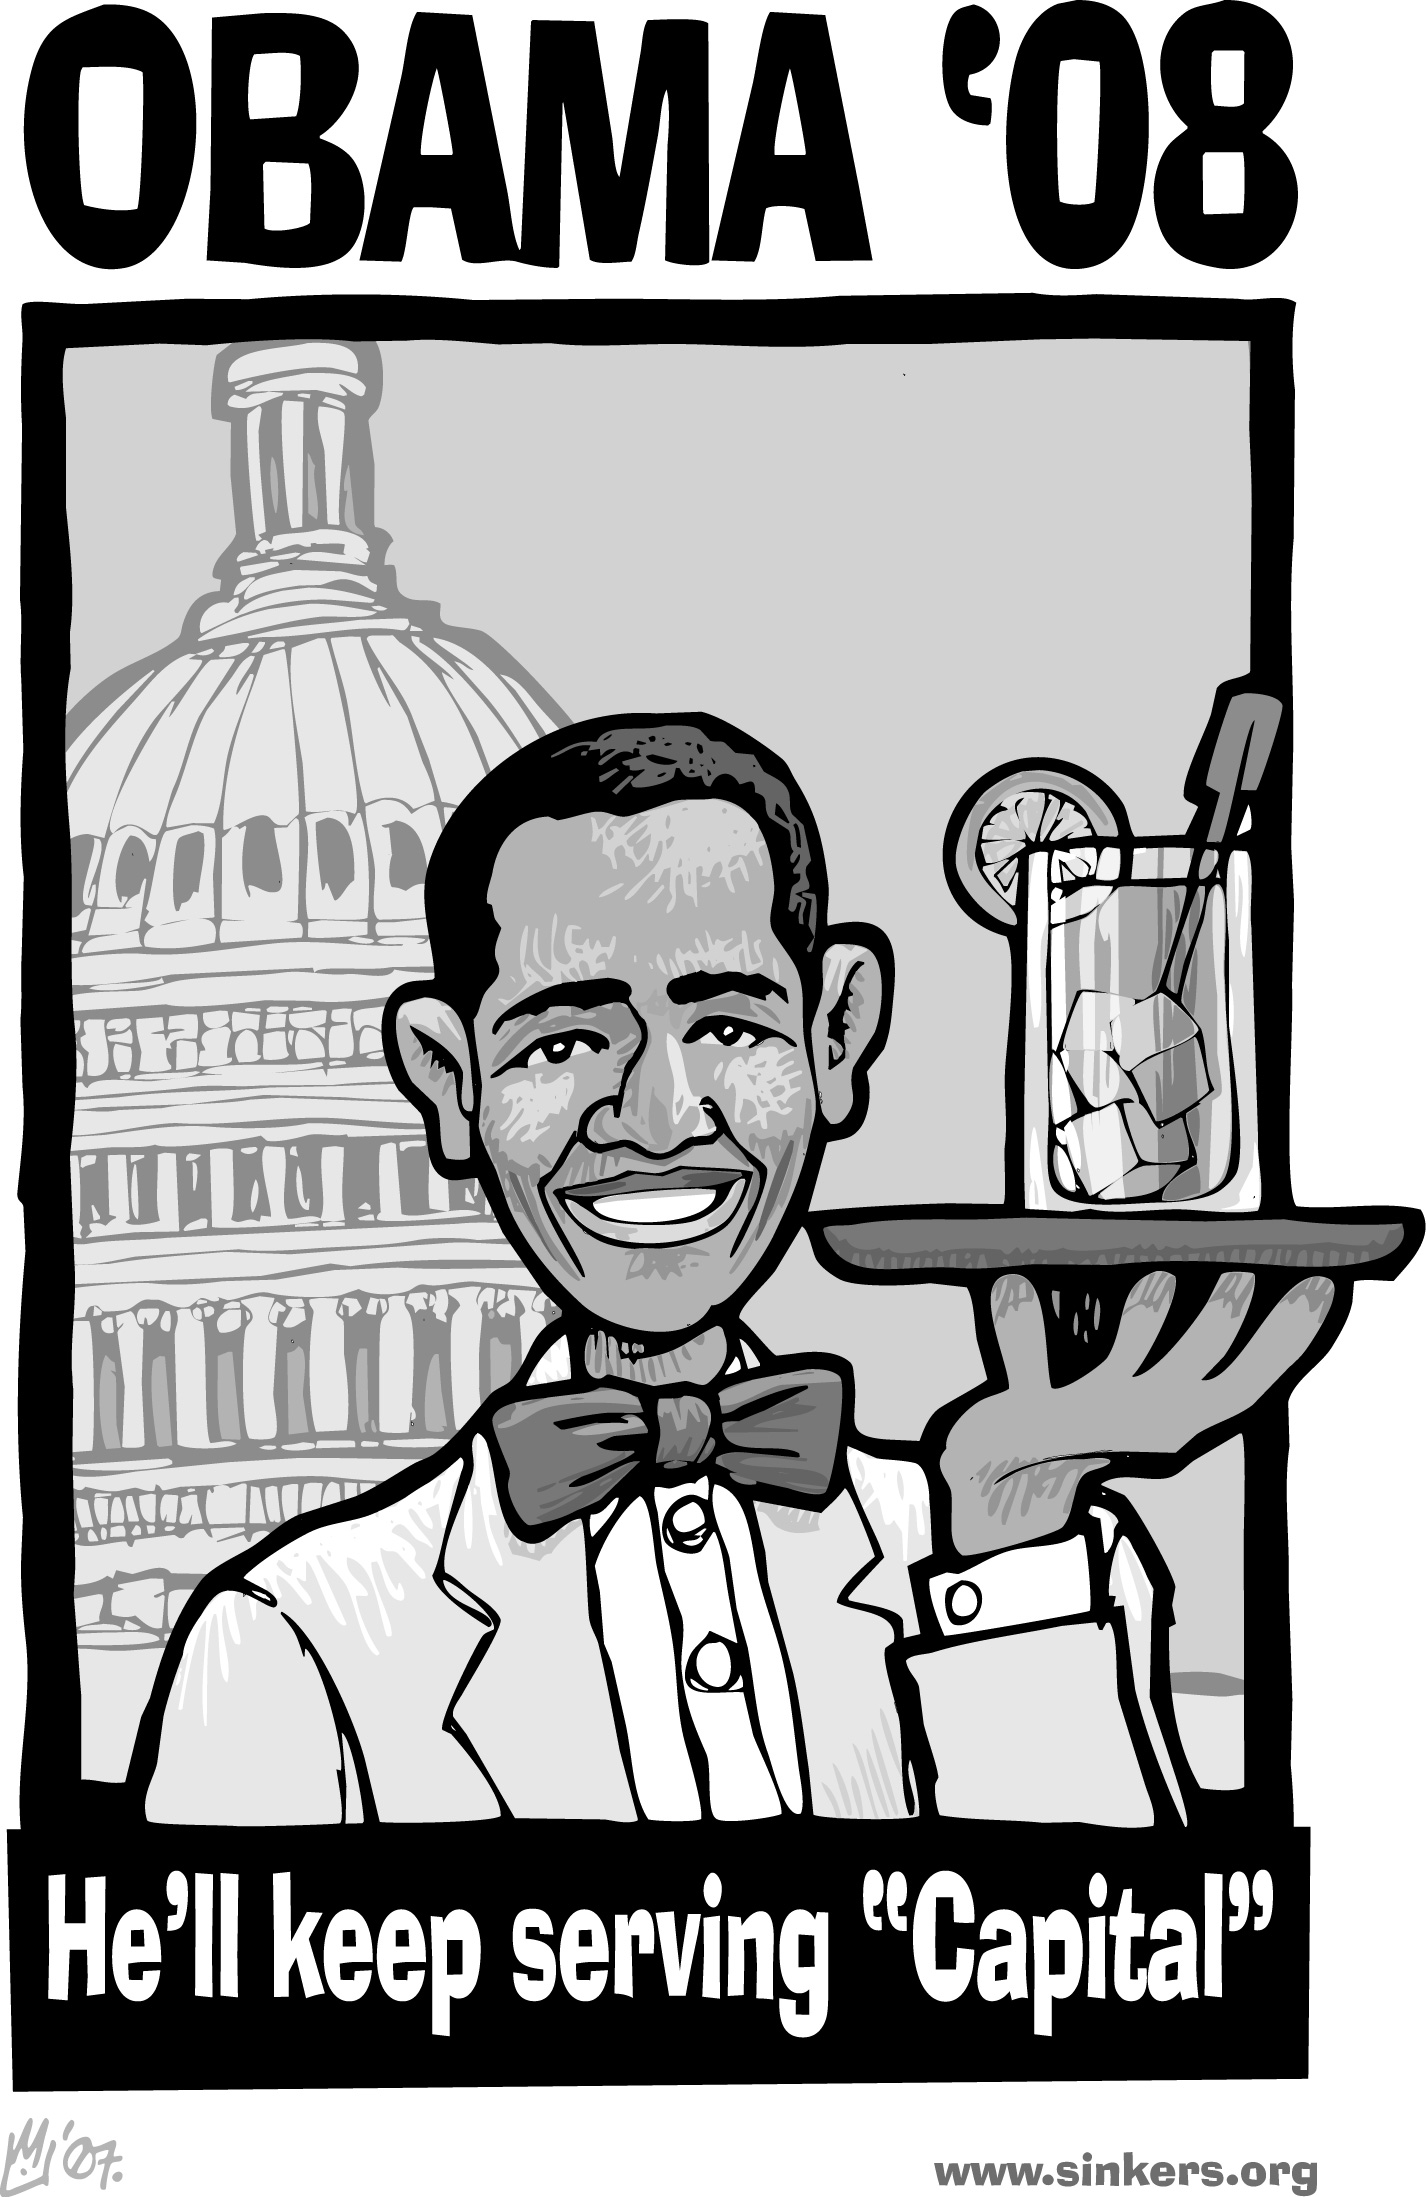 Obama the Waiter?